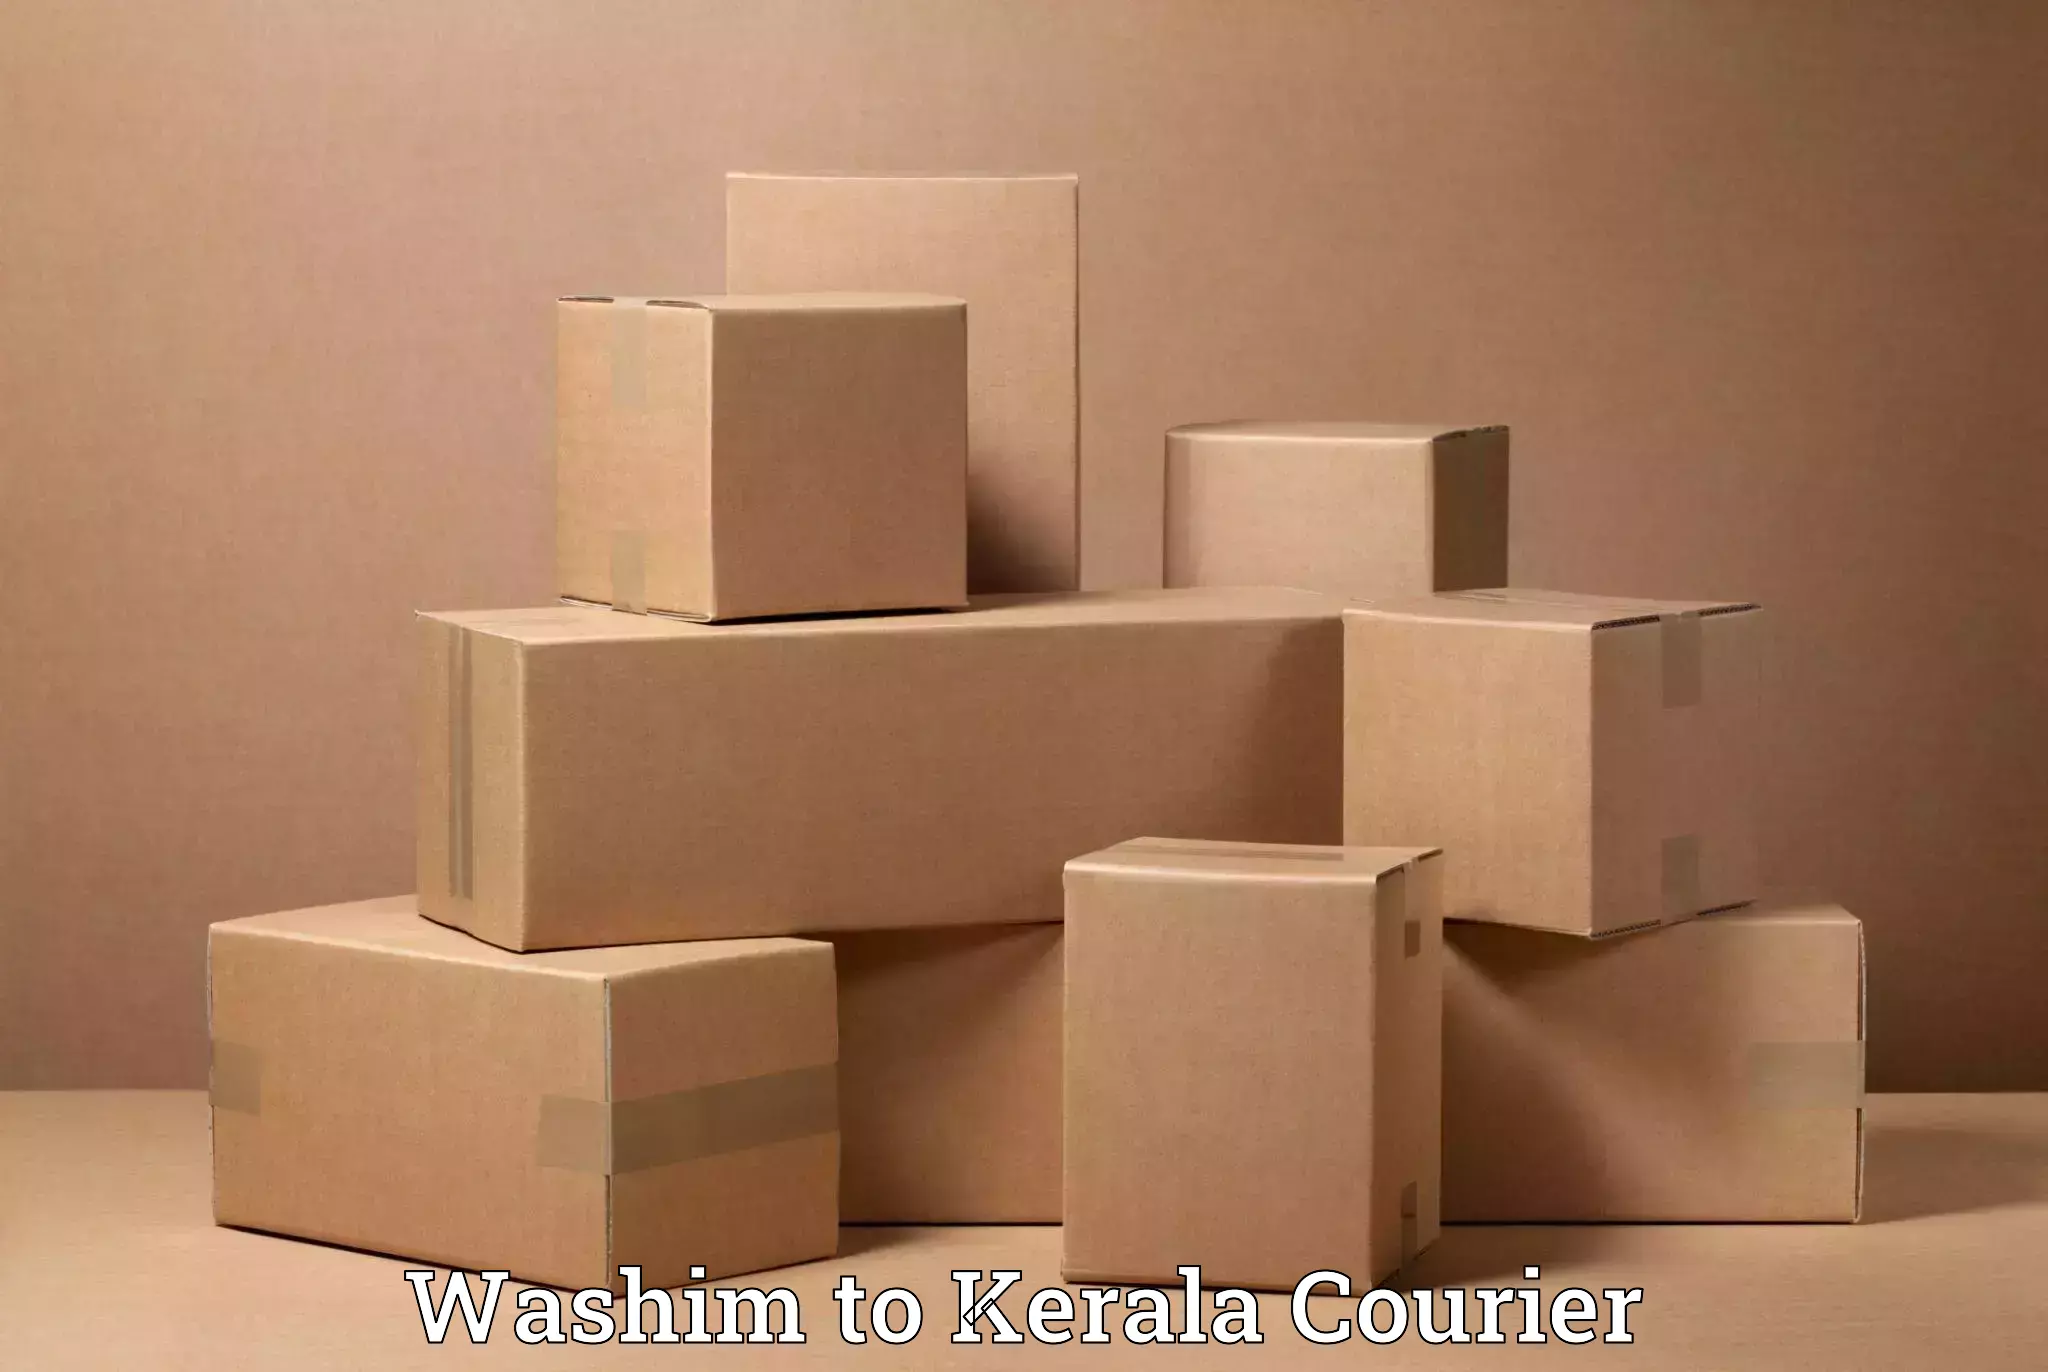 Professional movers Washim to Kerala